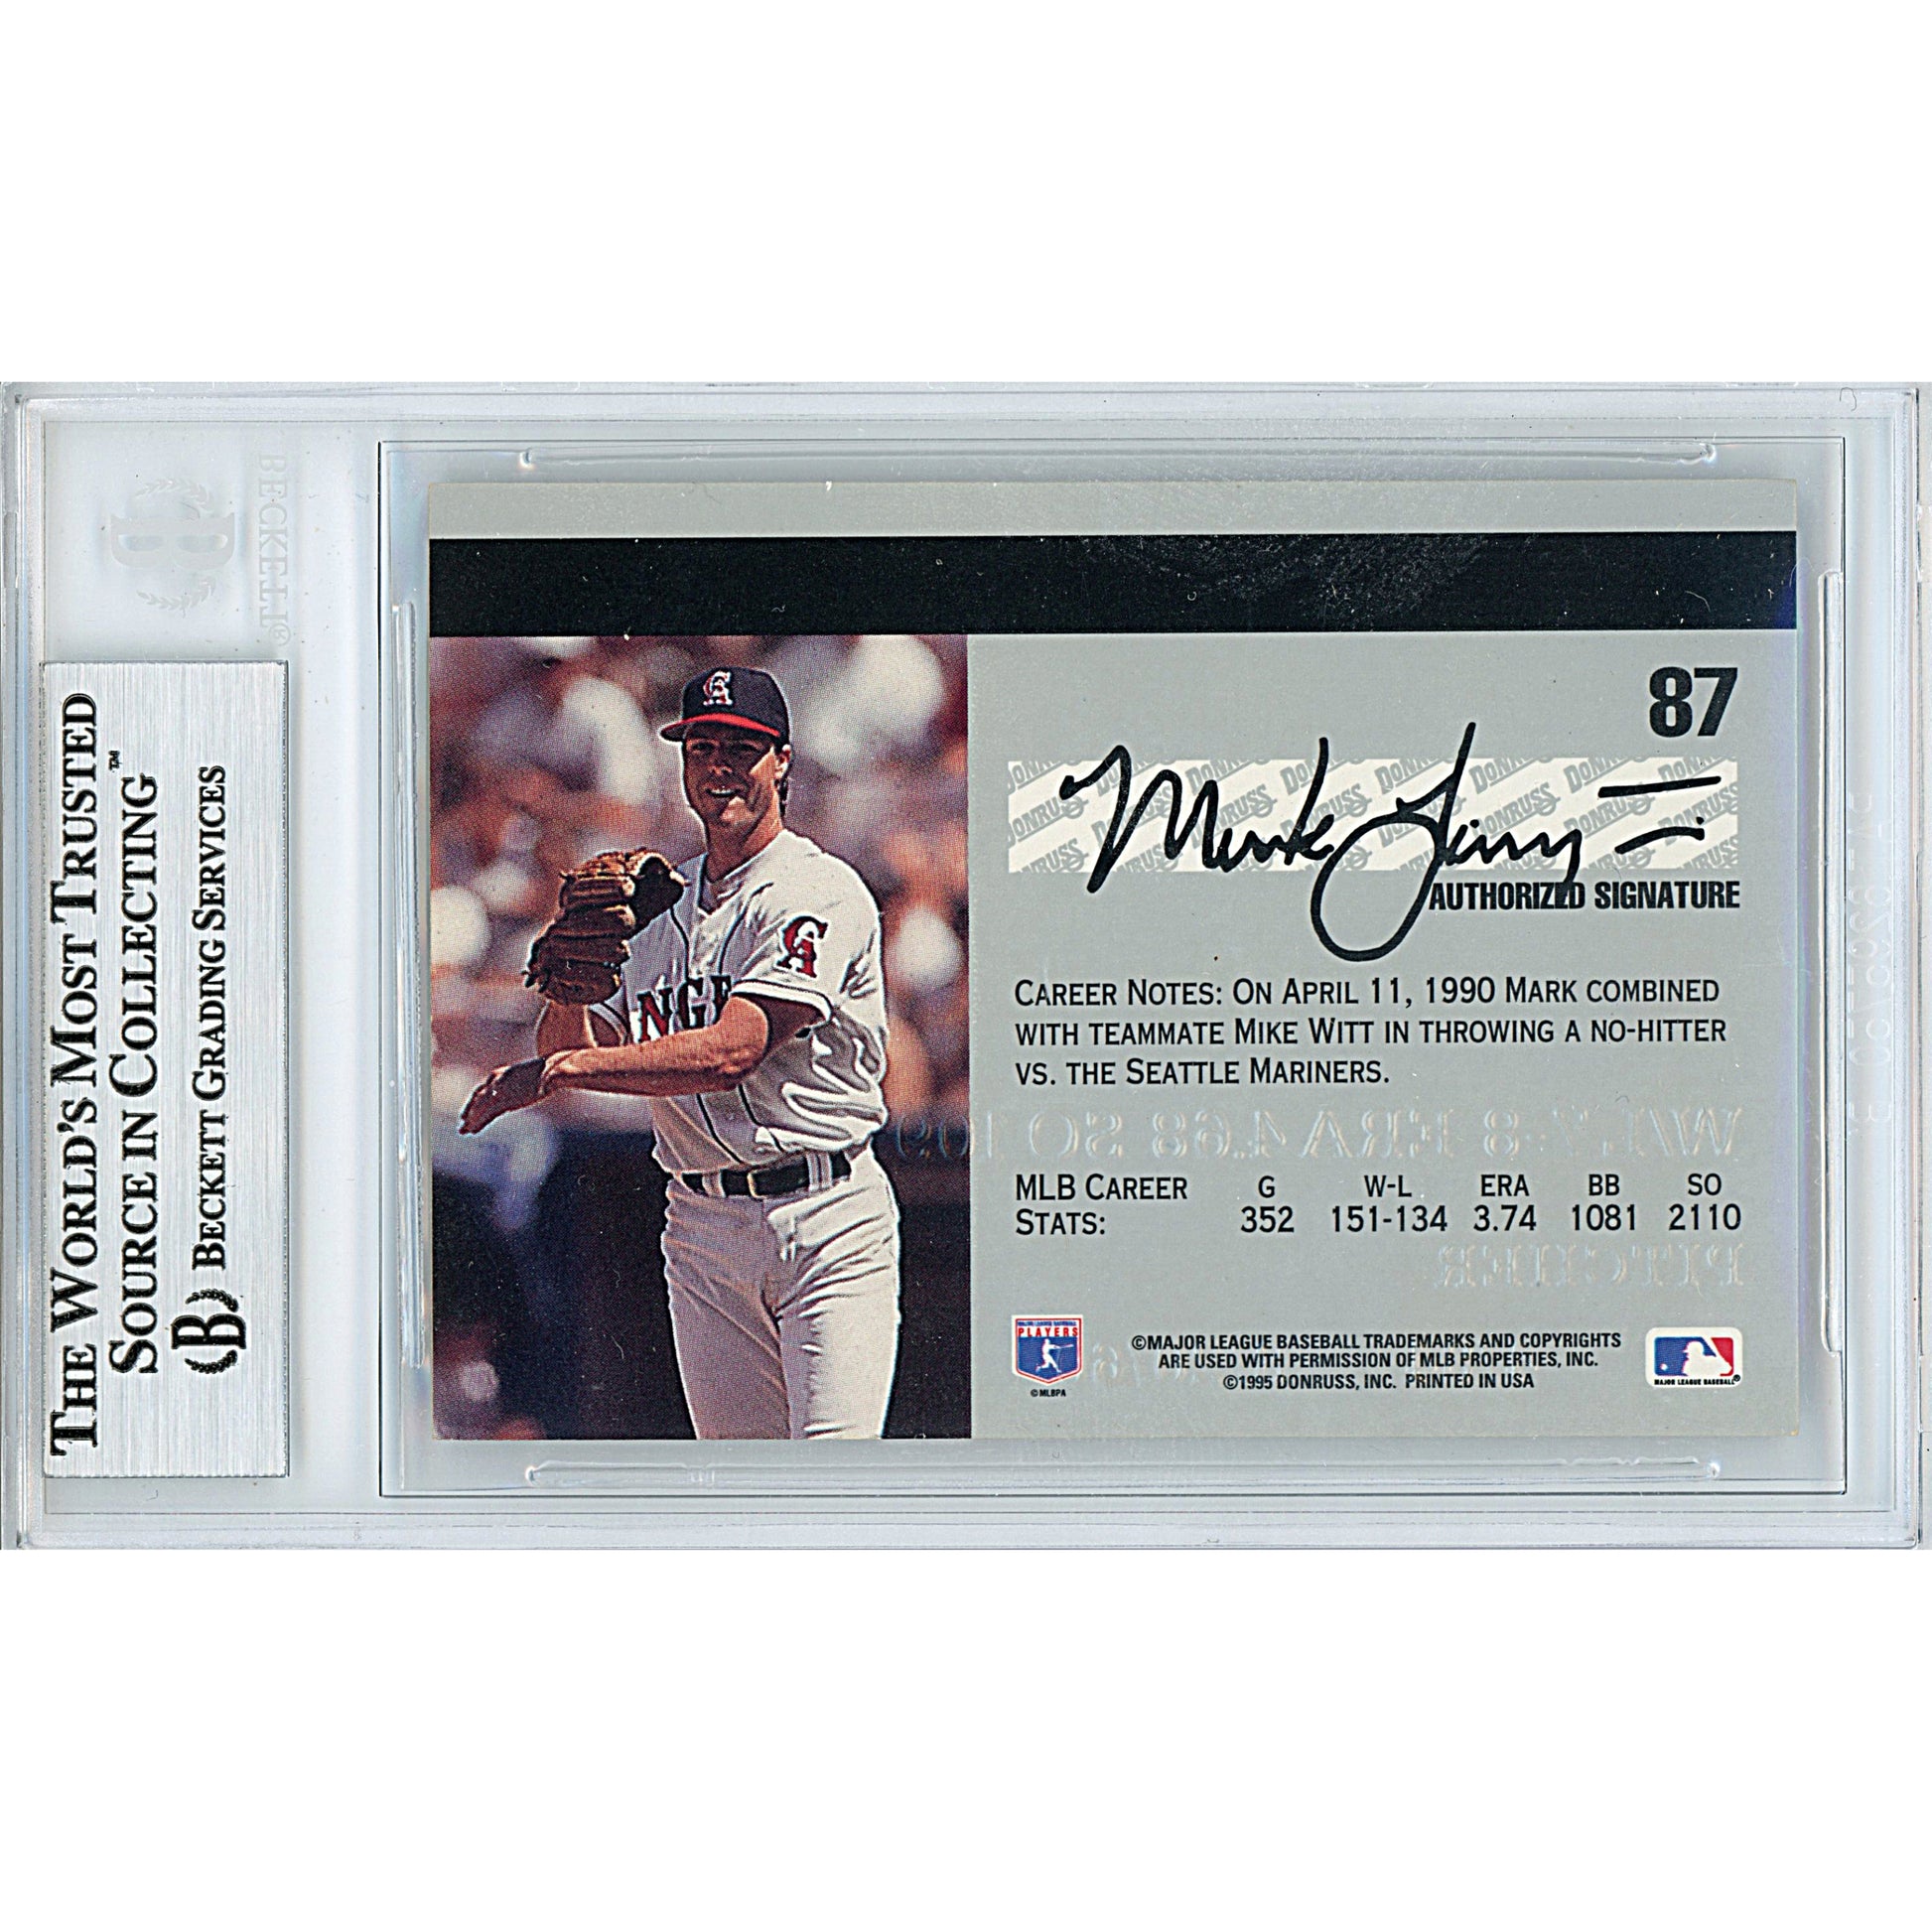 Baseballs- Autographed- Mark Langston Signed Los Angeles Angels 1995 Donruss Studio Baseball Card Beckett BAS Slabbed 00013191070 - 103